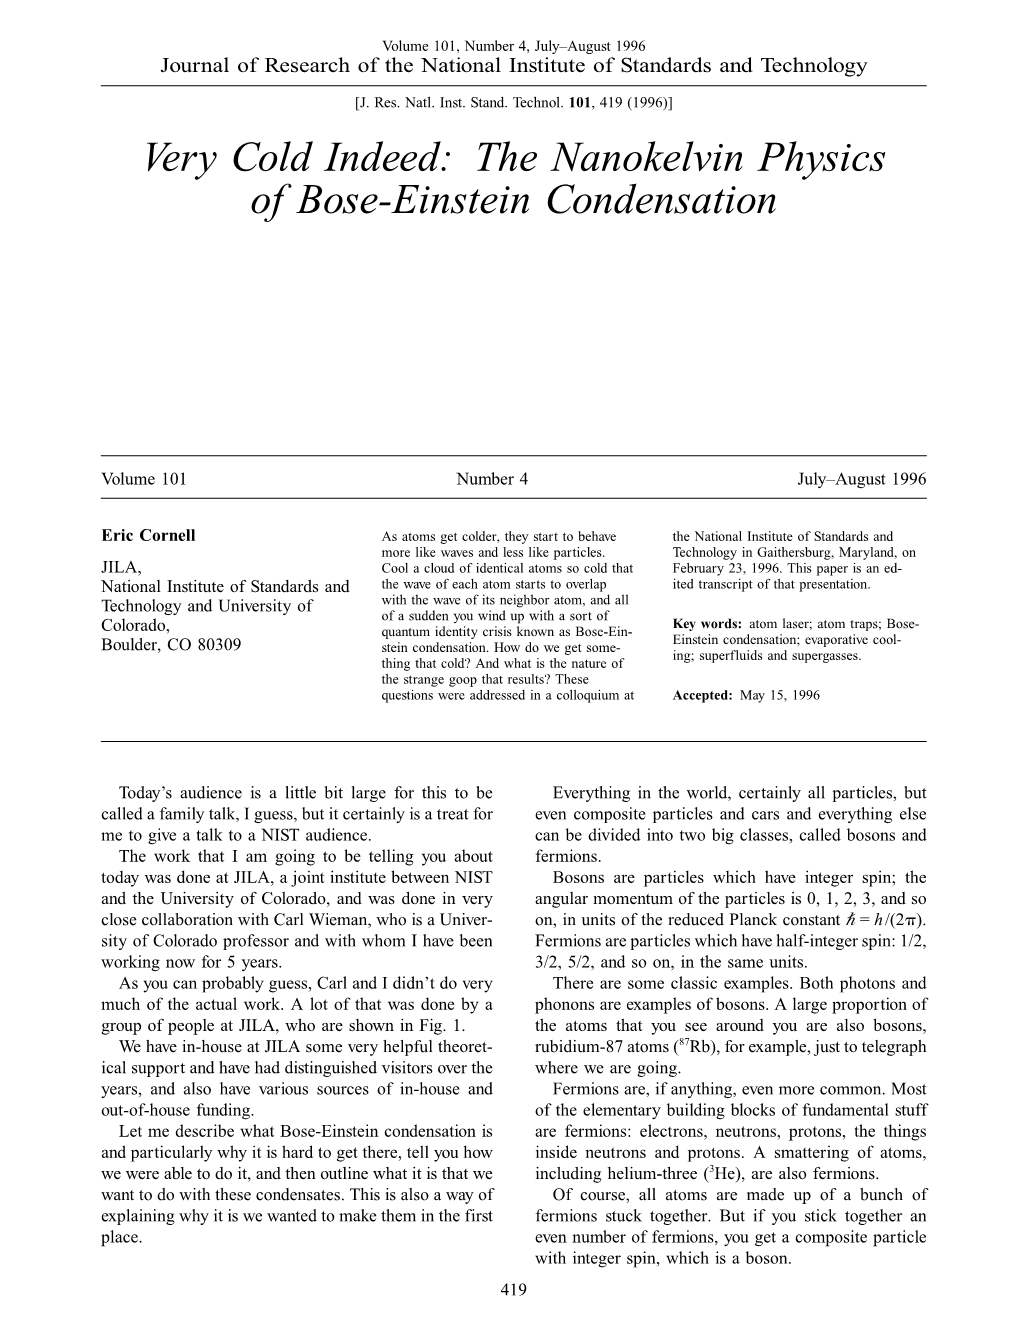 The Nanokelvin Physics of Bose-Einstein Condensation